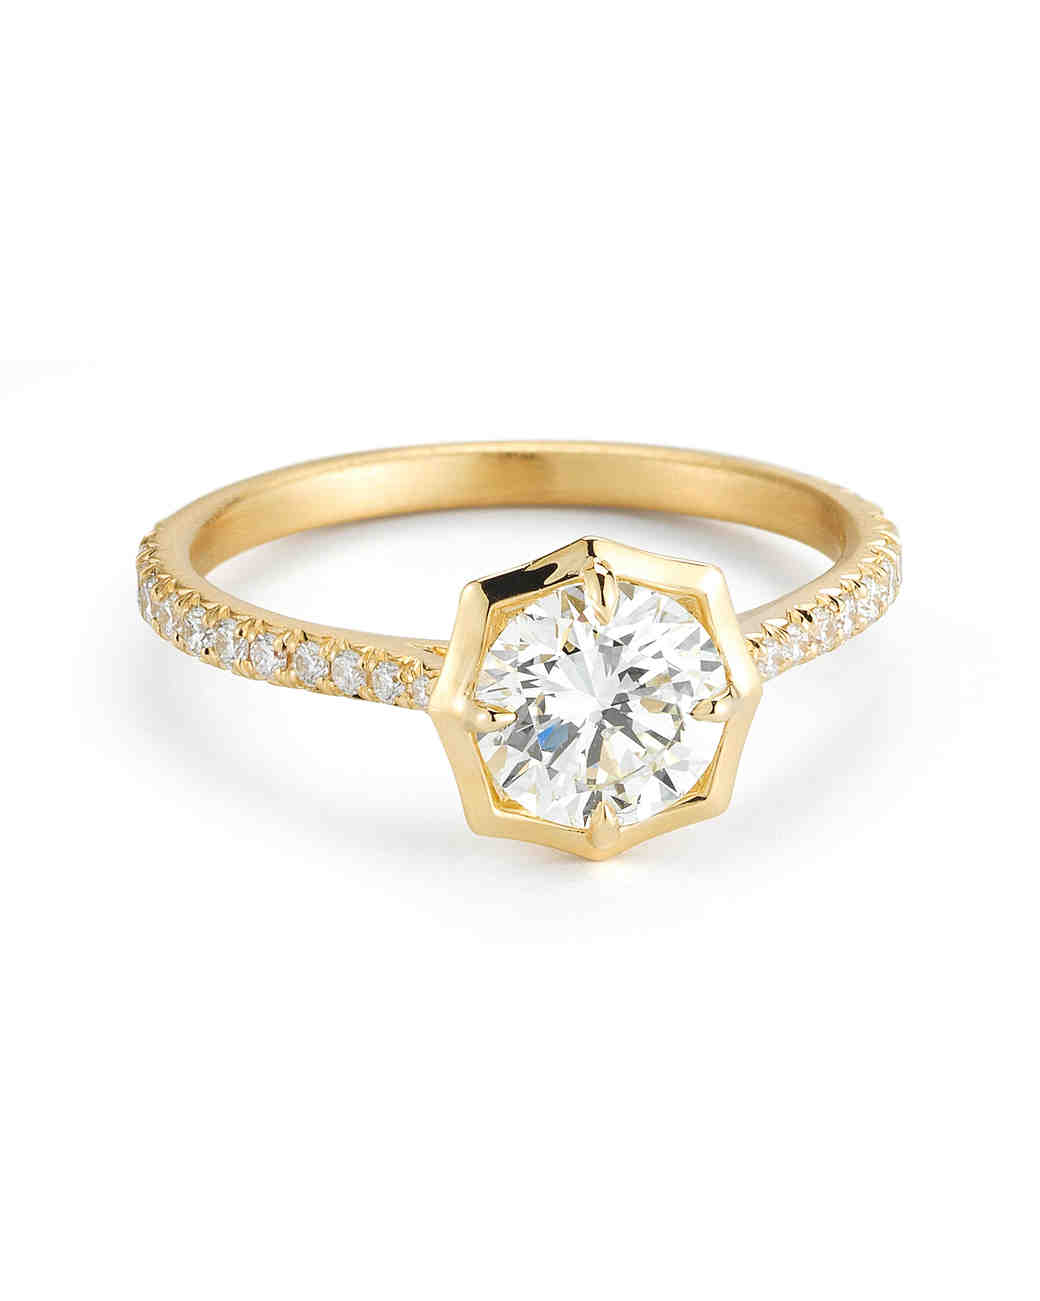 yellow gold engagement rings | martha stewart weddings cbfydpf